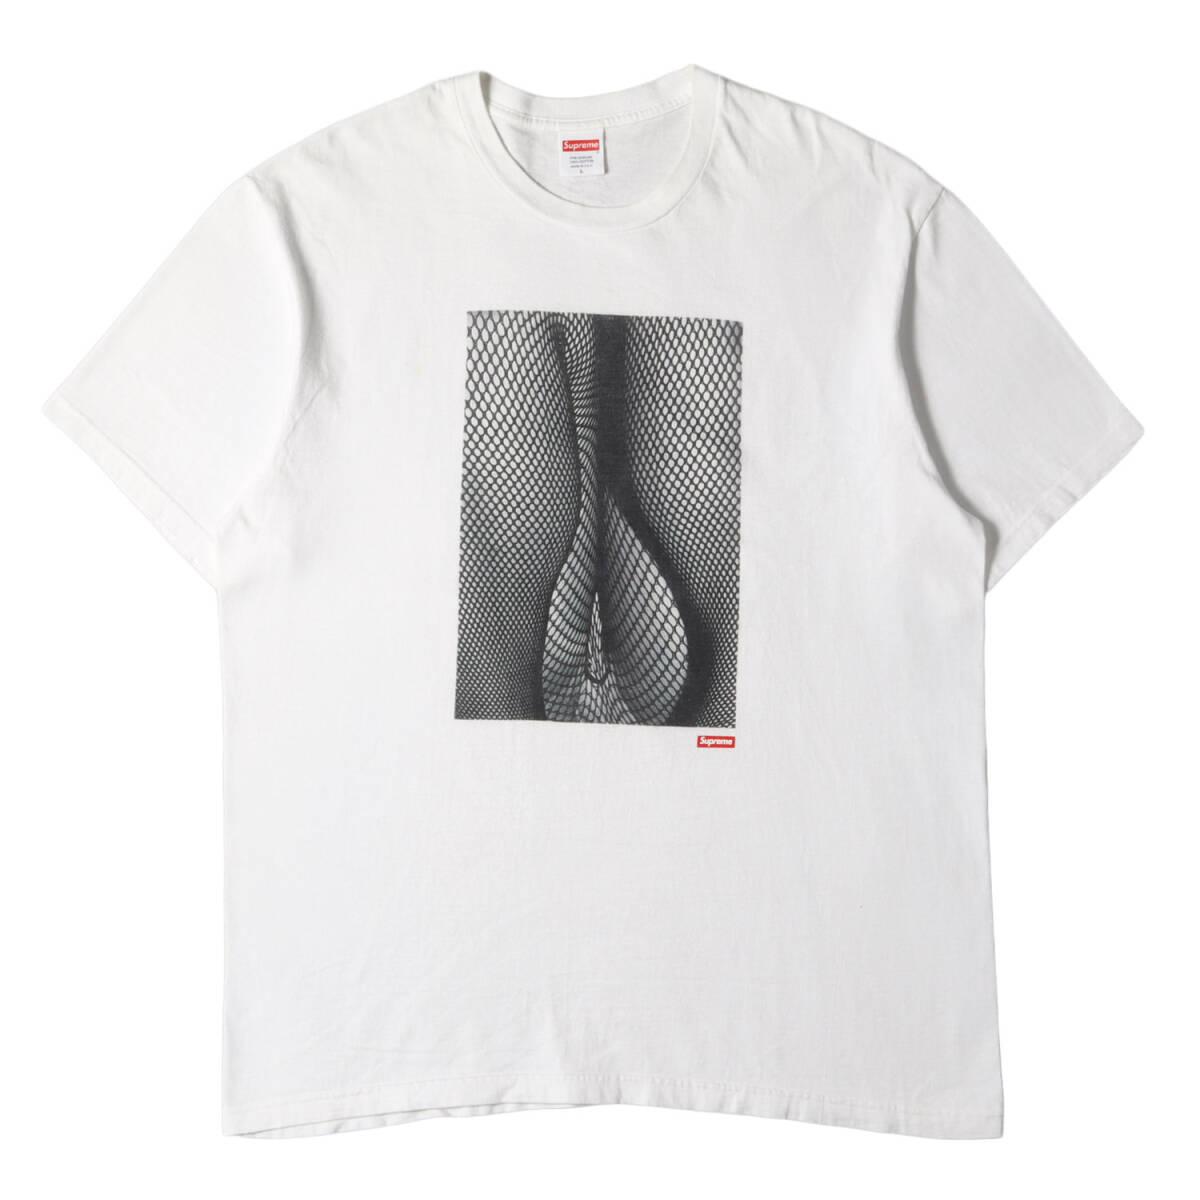 Supreme シュプリーム Tシャツ サイズ:L 22SS 森山大道 網タイツ フォト クルーネック 半袖Tシャツ Daido Moriyama Tights Tee ホワイト_画像1